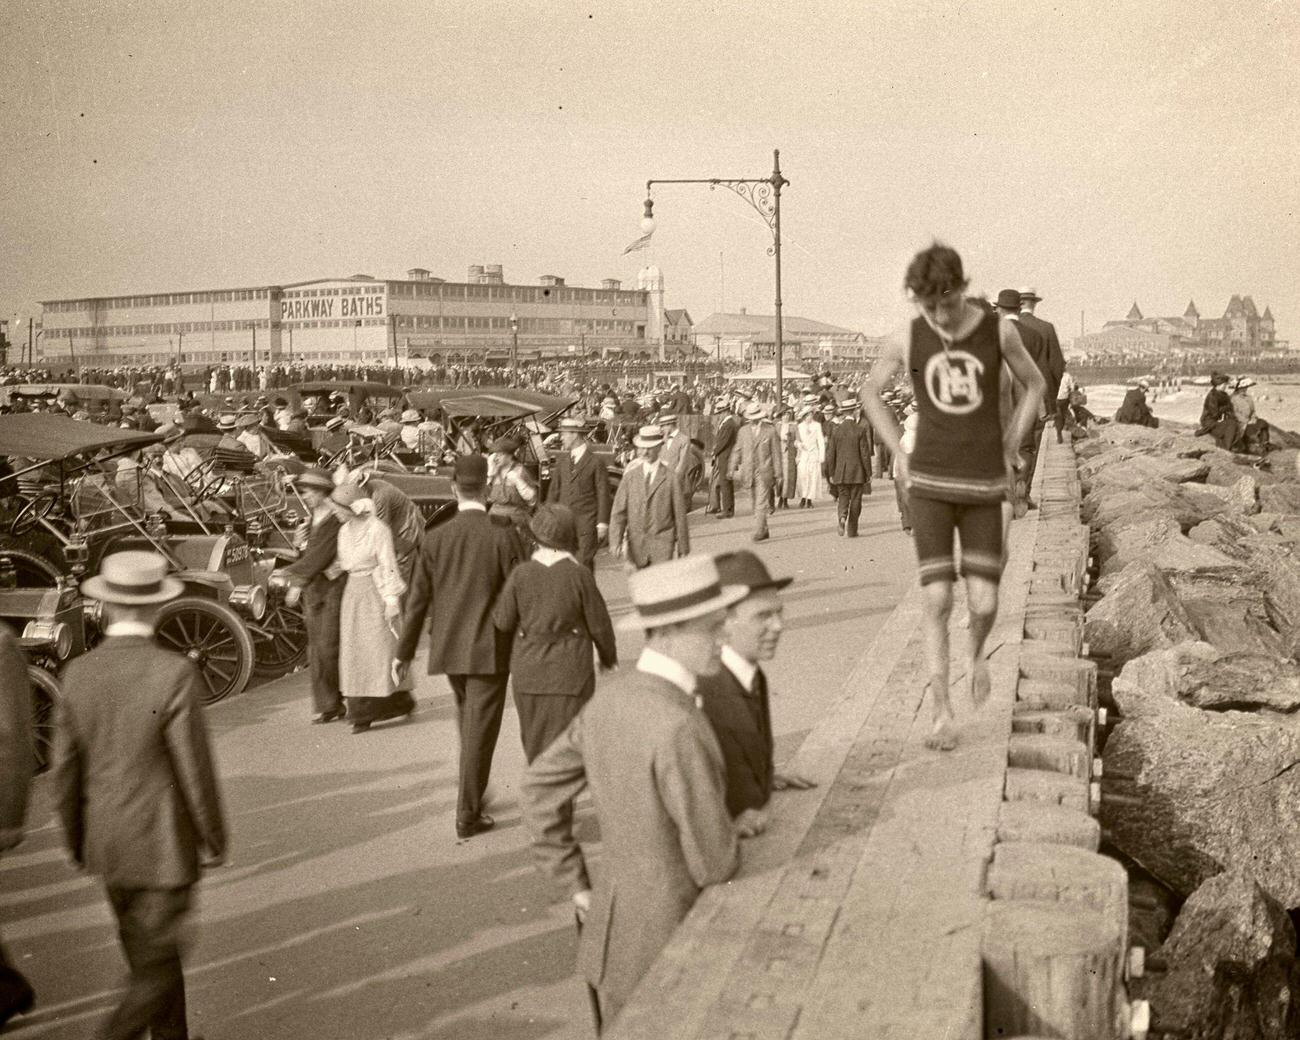 1915 Coney Island Boardwalk, Beach, Pedestrians, And Autos.